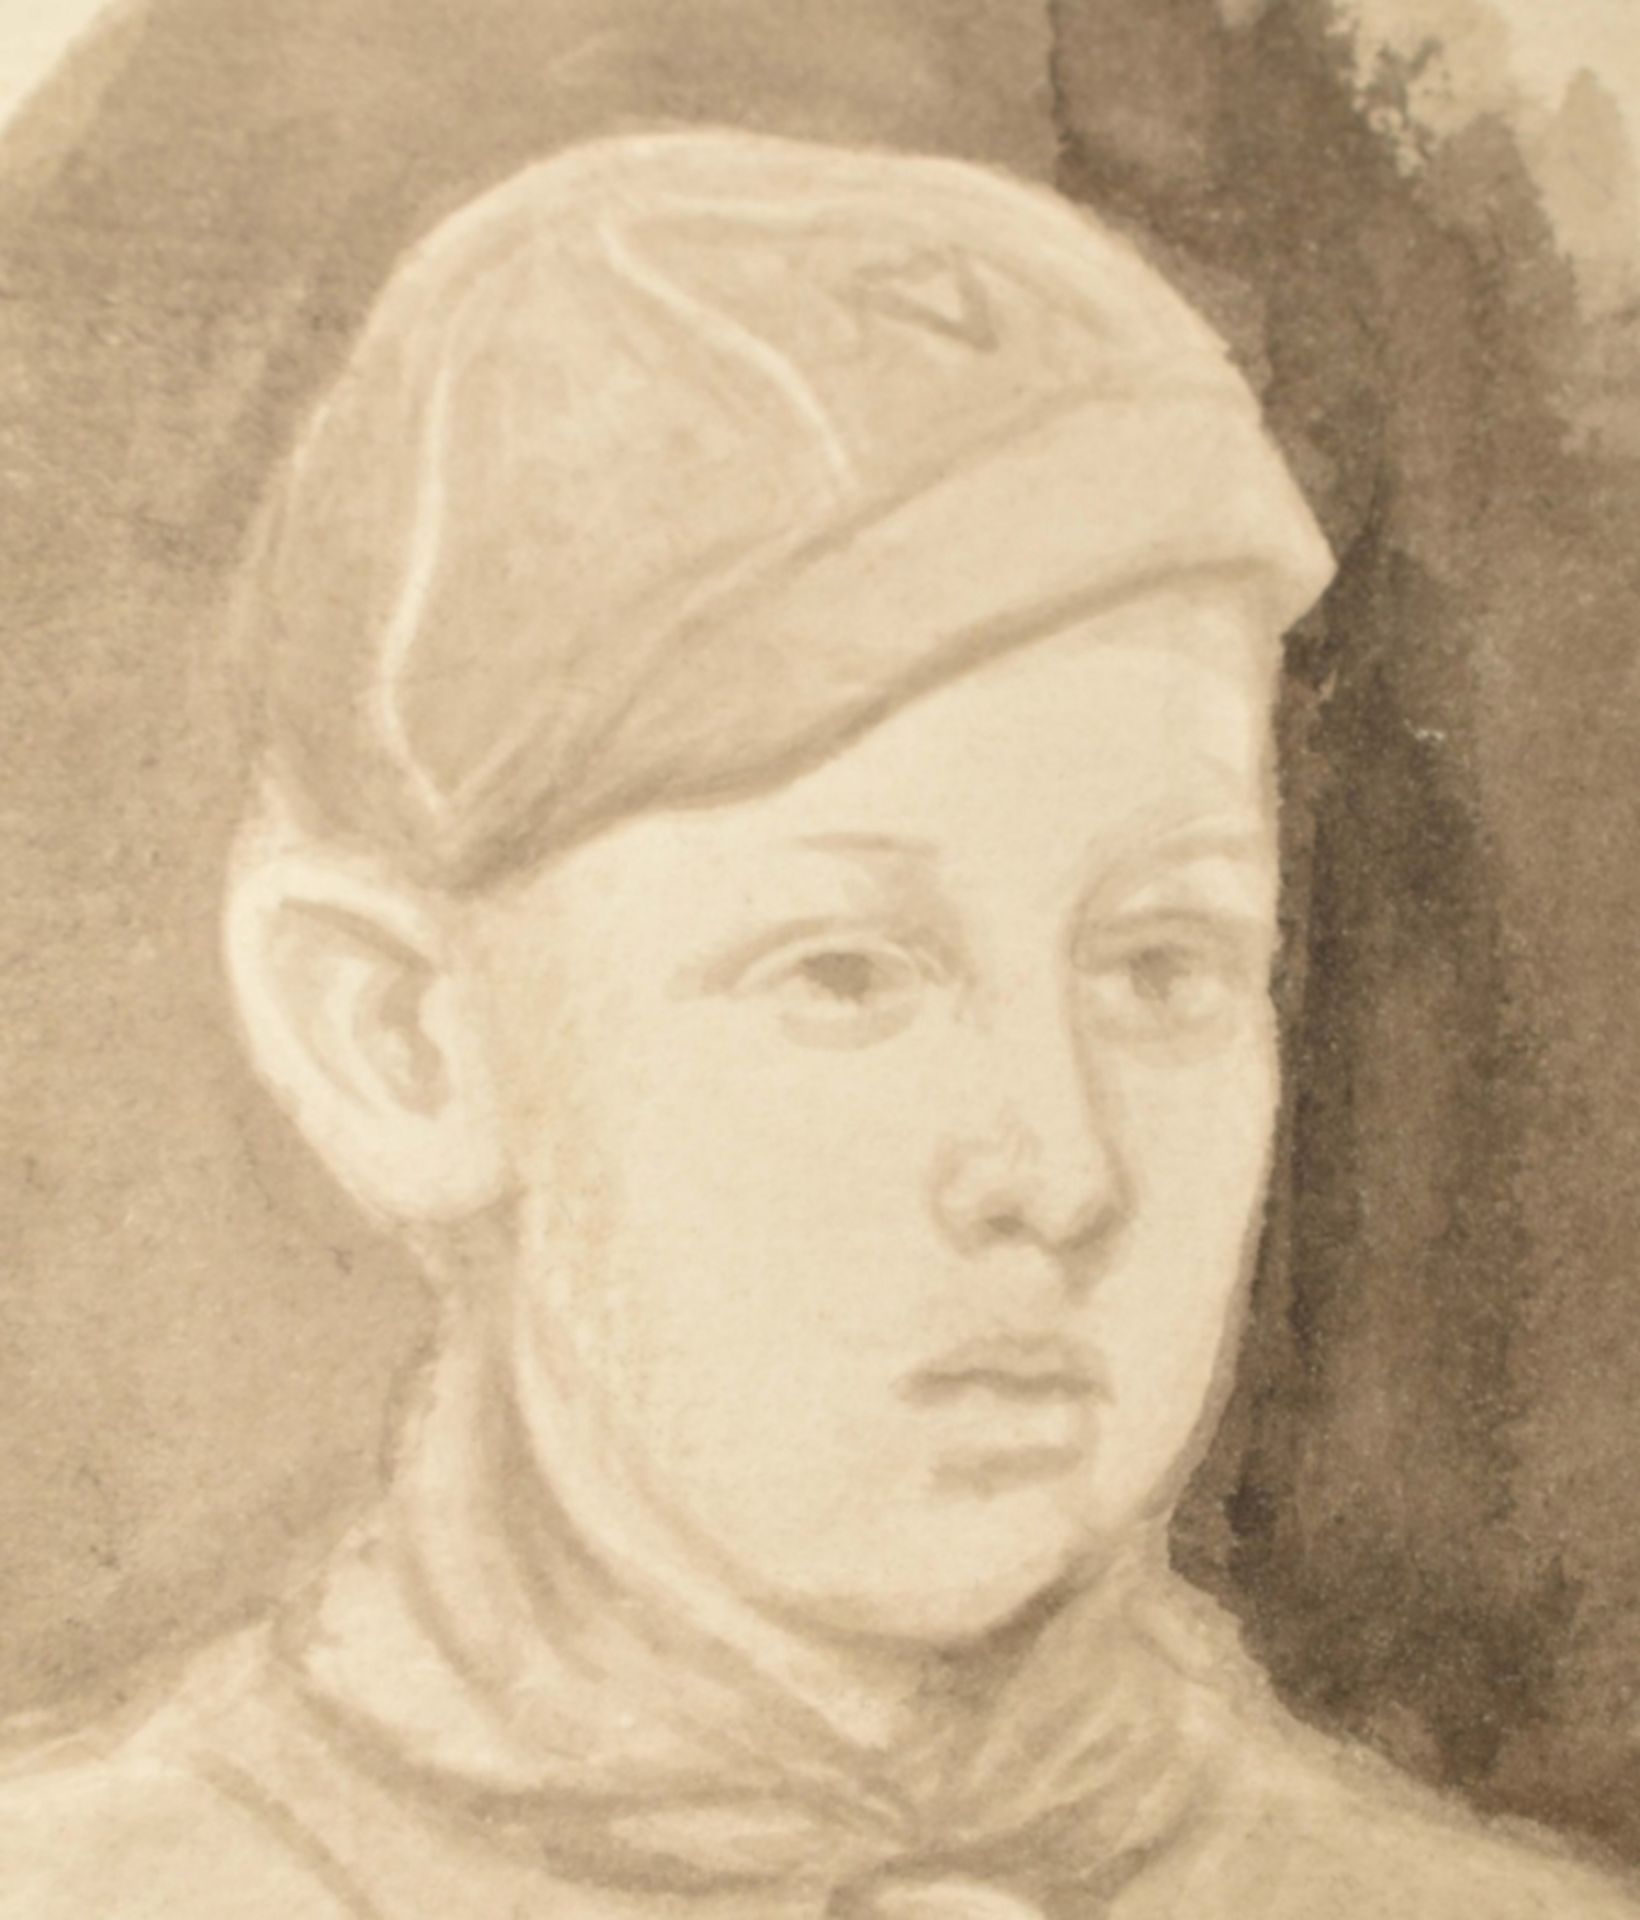 Moos Cohen (1901-1942). "Boyscout" - Image 6 of 6